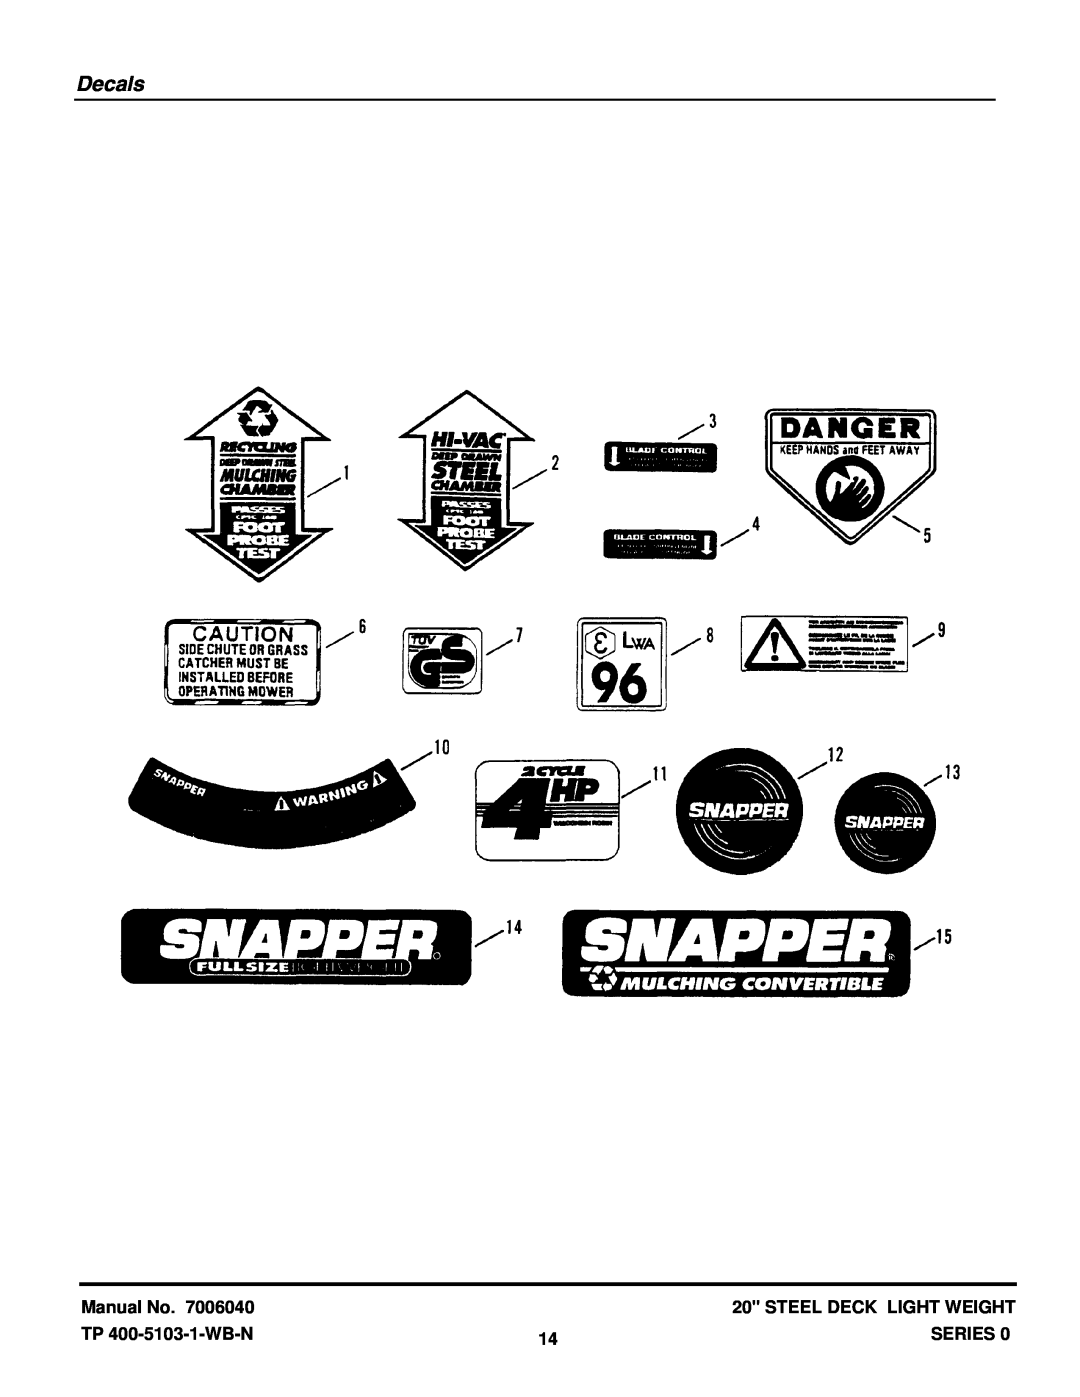 Snapper D20380, ELW400, EDLW400R2, R20400 manual Decals, Manual No, Steel Deck Light Weight, TP 400-5103-1-WB-N, Series 